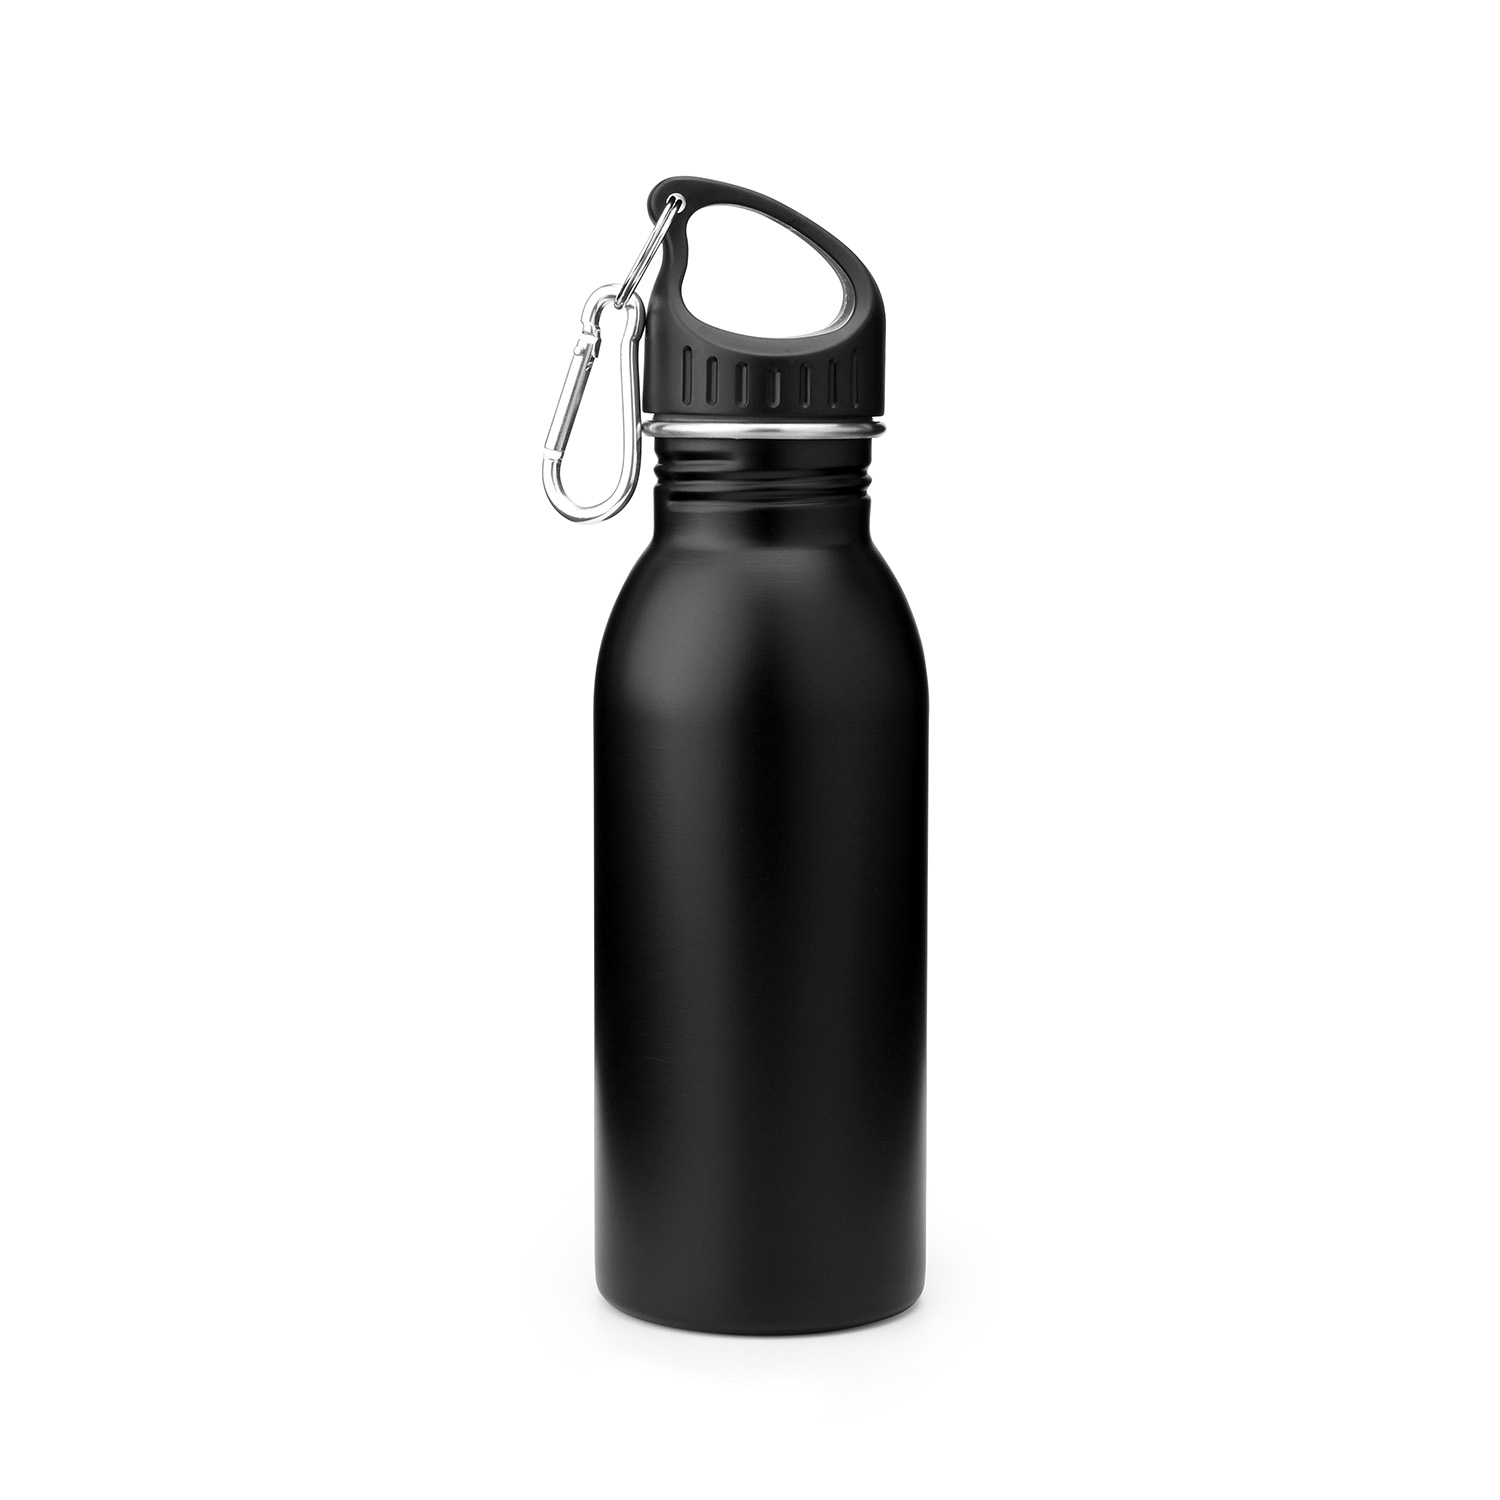 https://www.waterbottle.tech/wp-content/uploads/2019/08/single-wall-stainless-steel-water-bottle-with-carabiner-s12500a5-1.jpg